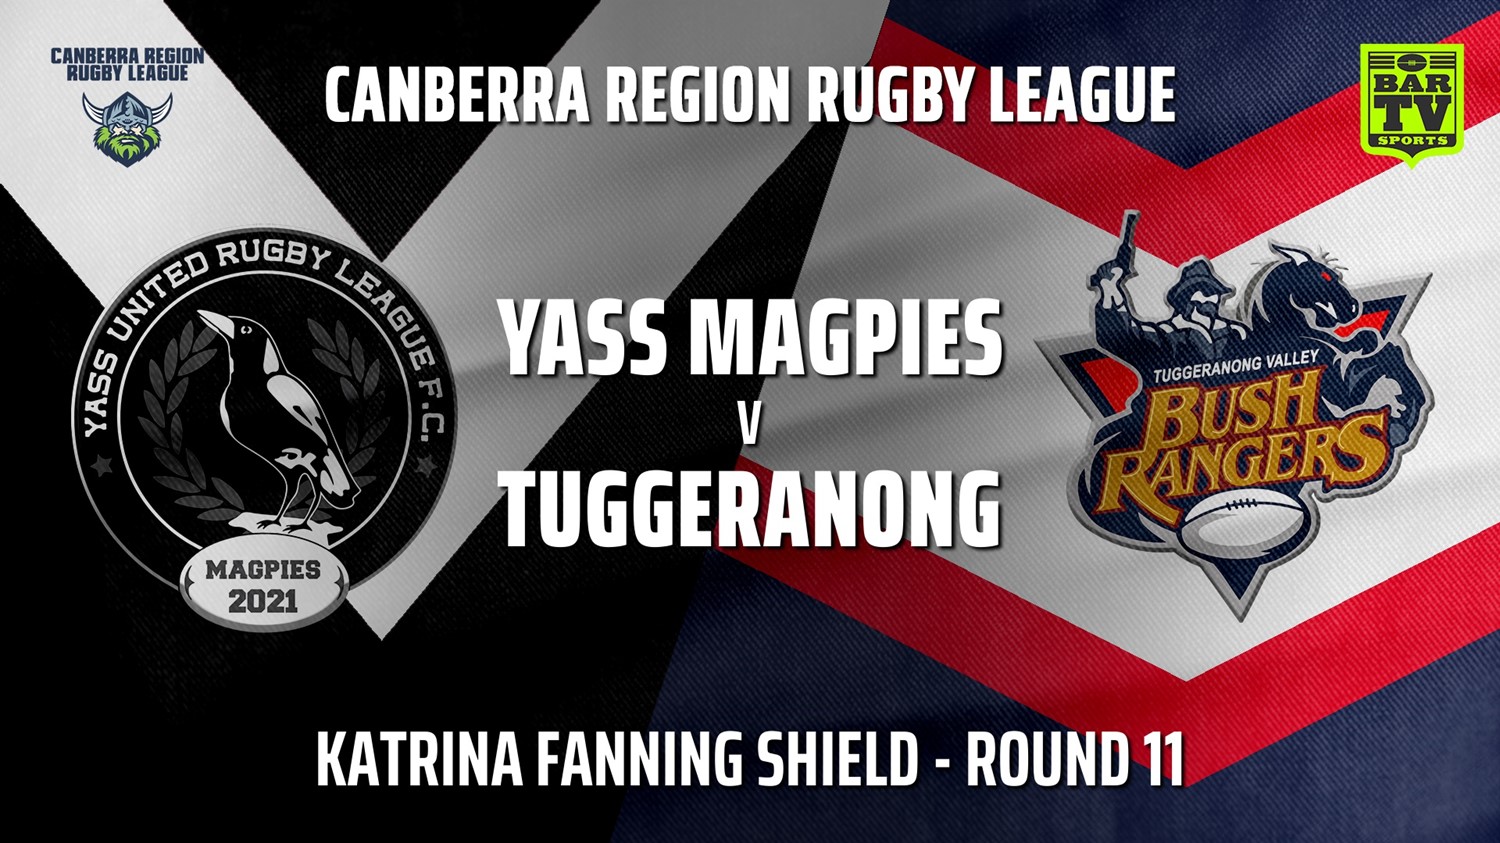 210710-Canberra Round 10 - Katrina Fanning Shield - Yass Magpies v Tuggeranong Bushrangers Slate Image